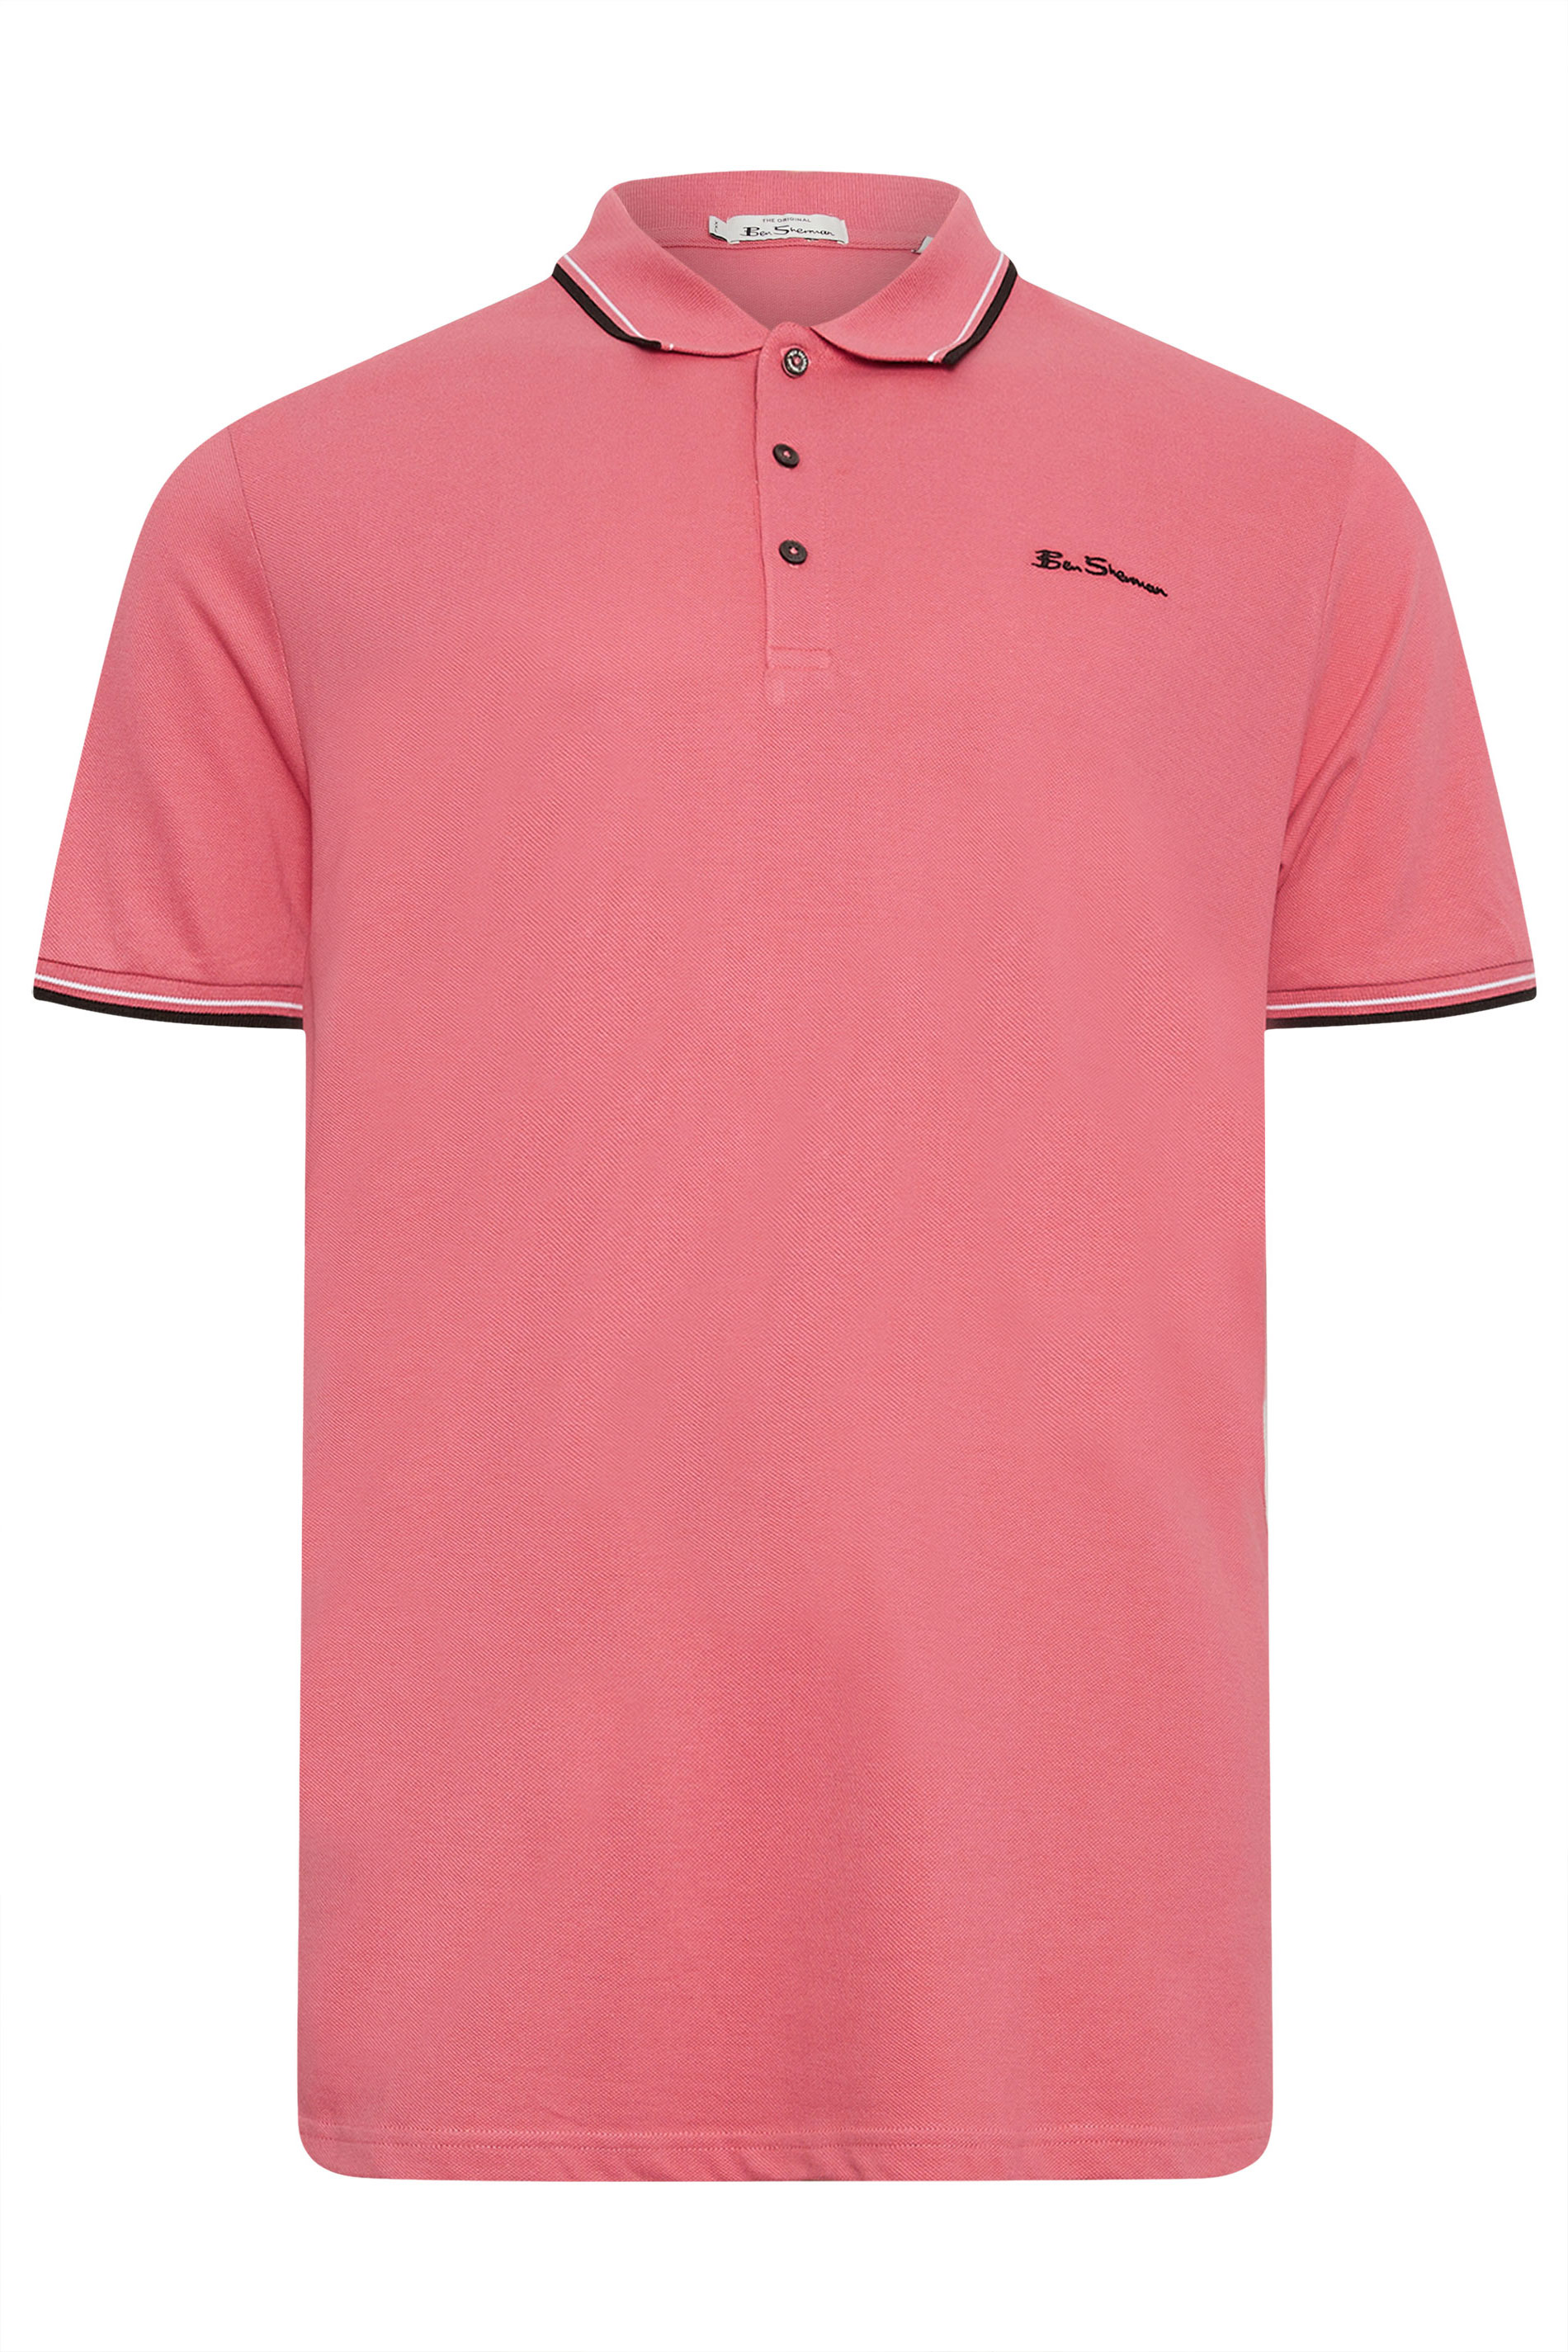 BEN SHERMAN Big & Tall Pink Tipped Polo Shirt | BadRhino